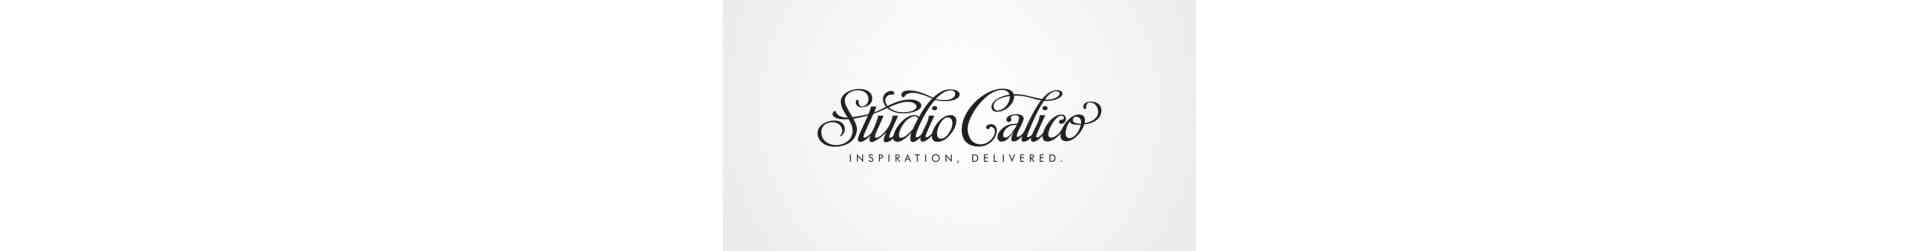 Studio Calico 